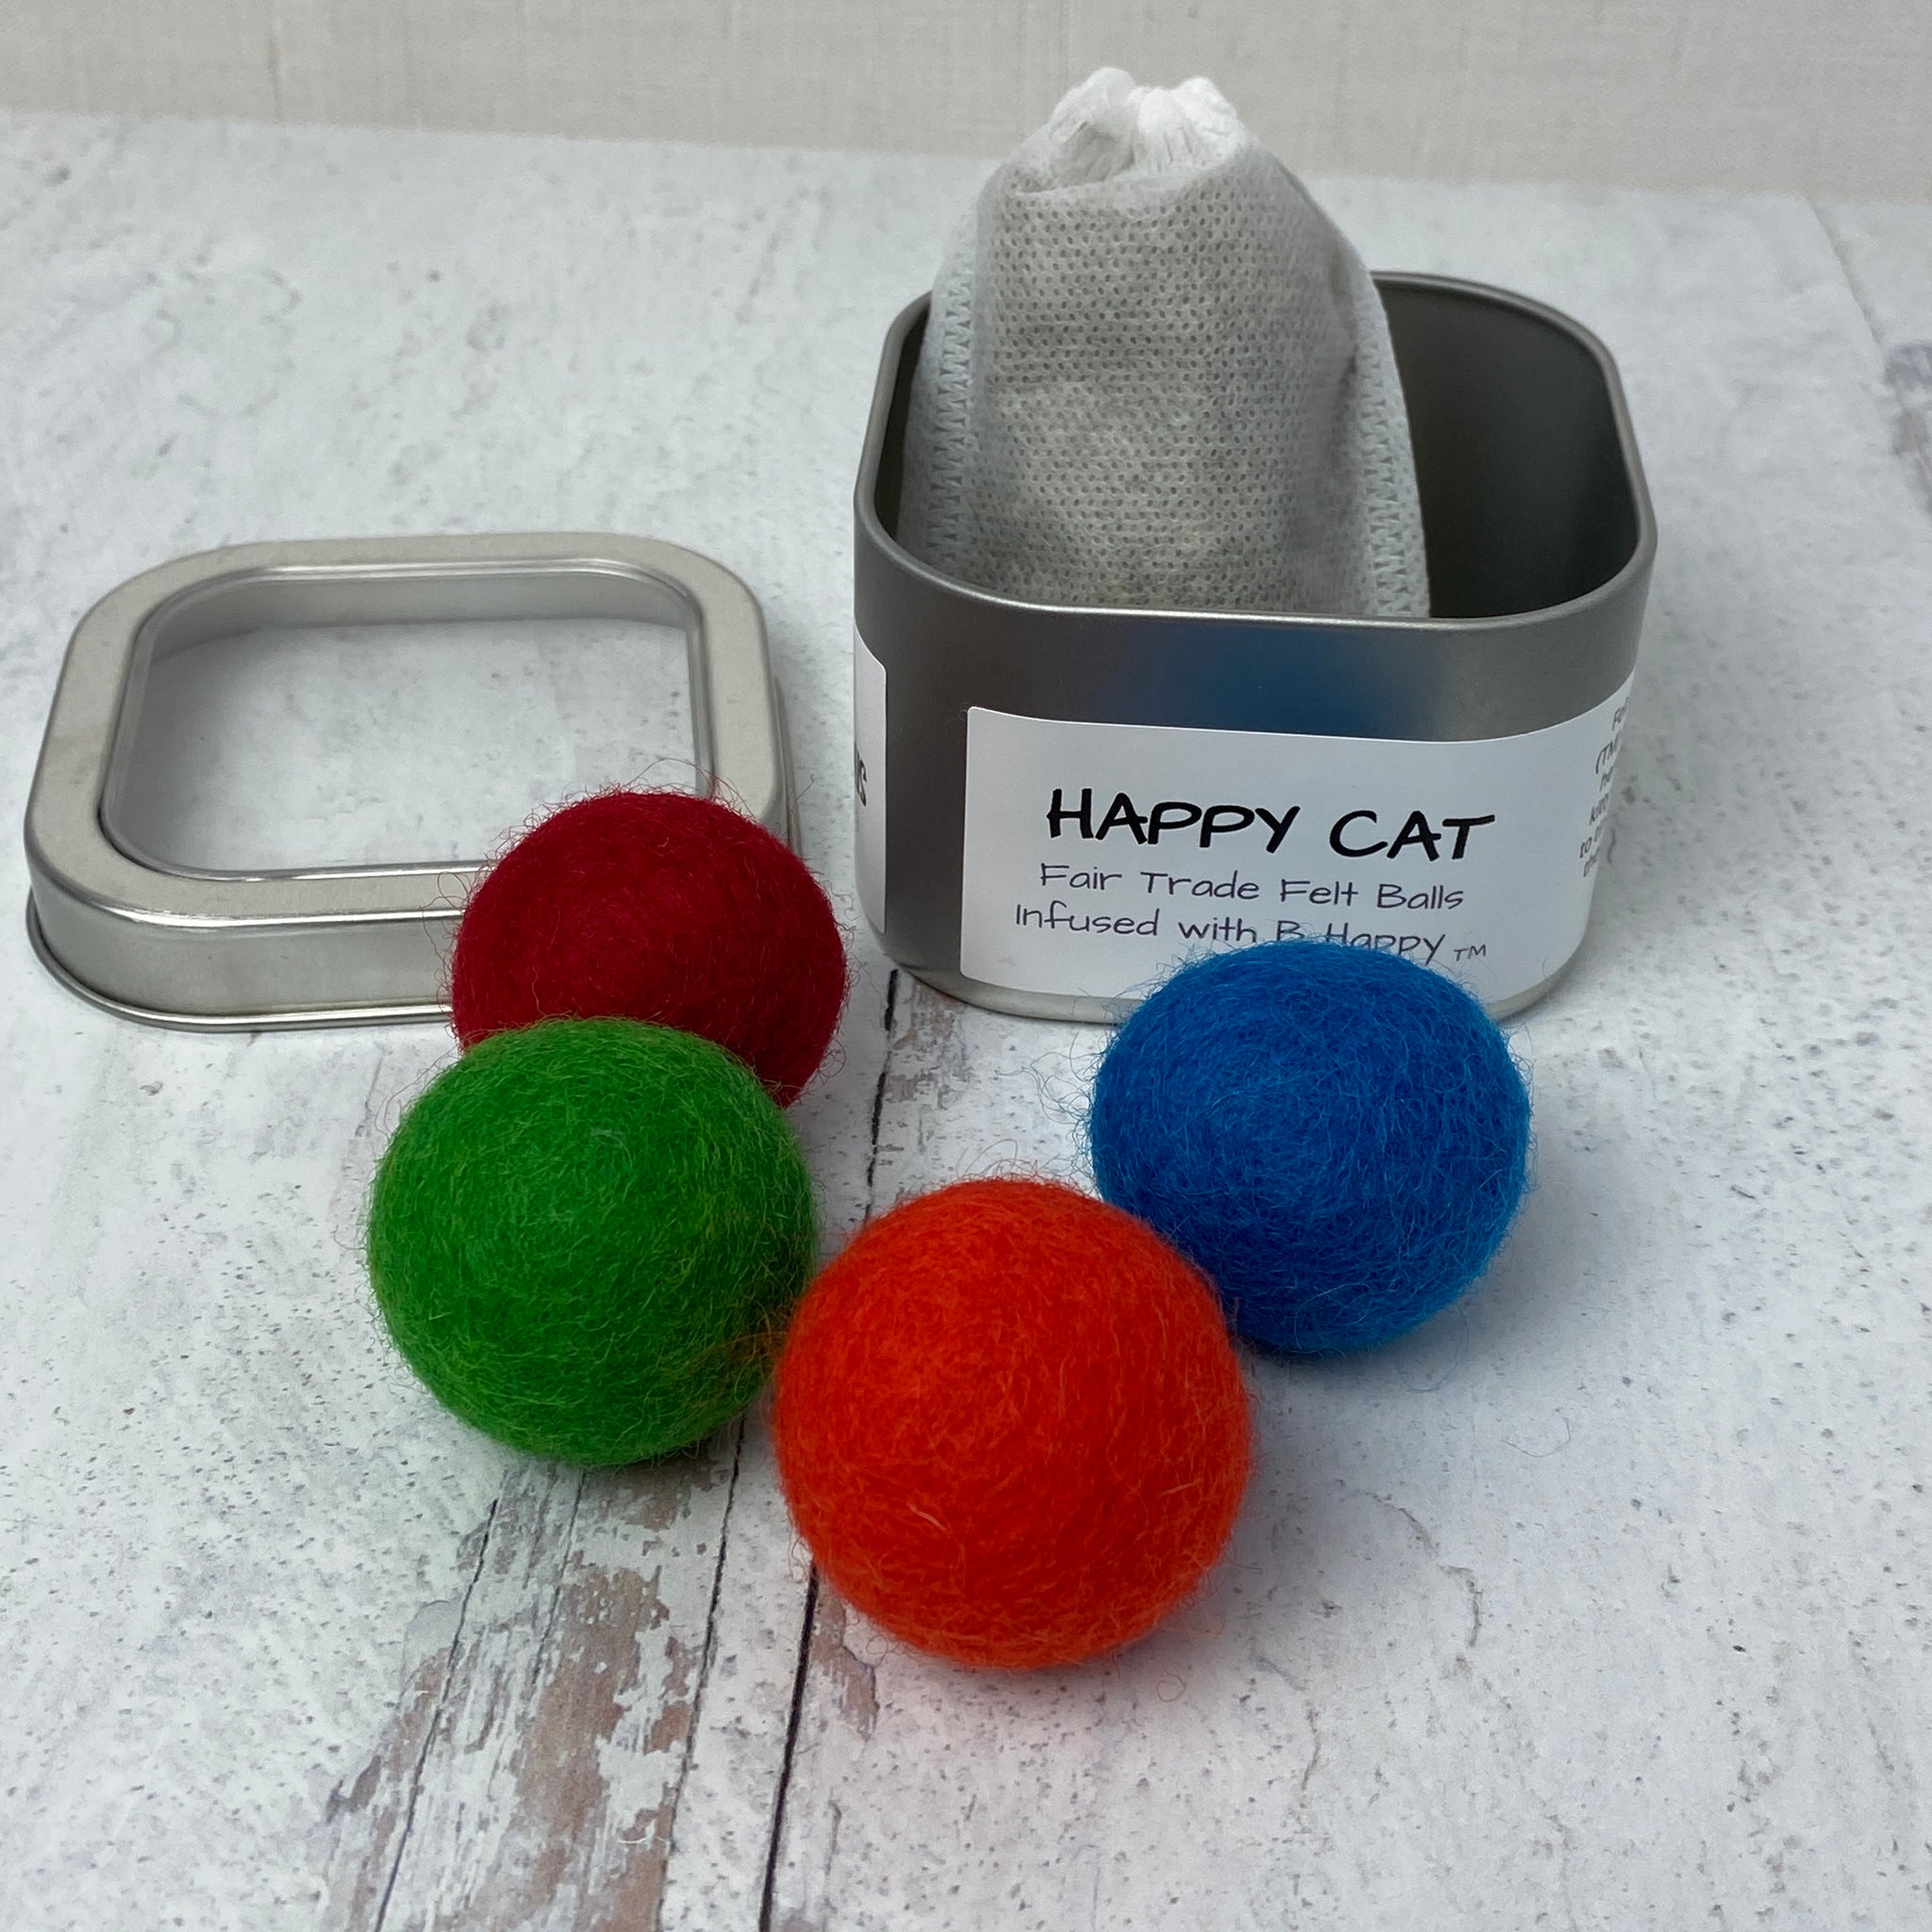 Rechargeable Catnip Infused XL Felt Balls